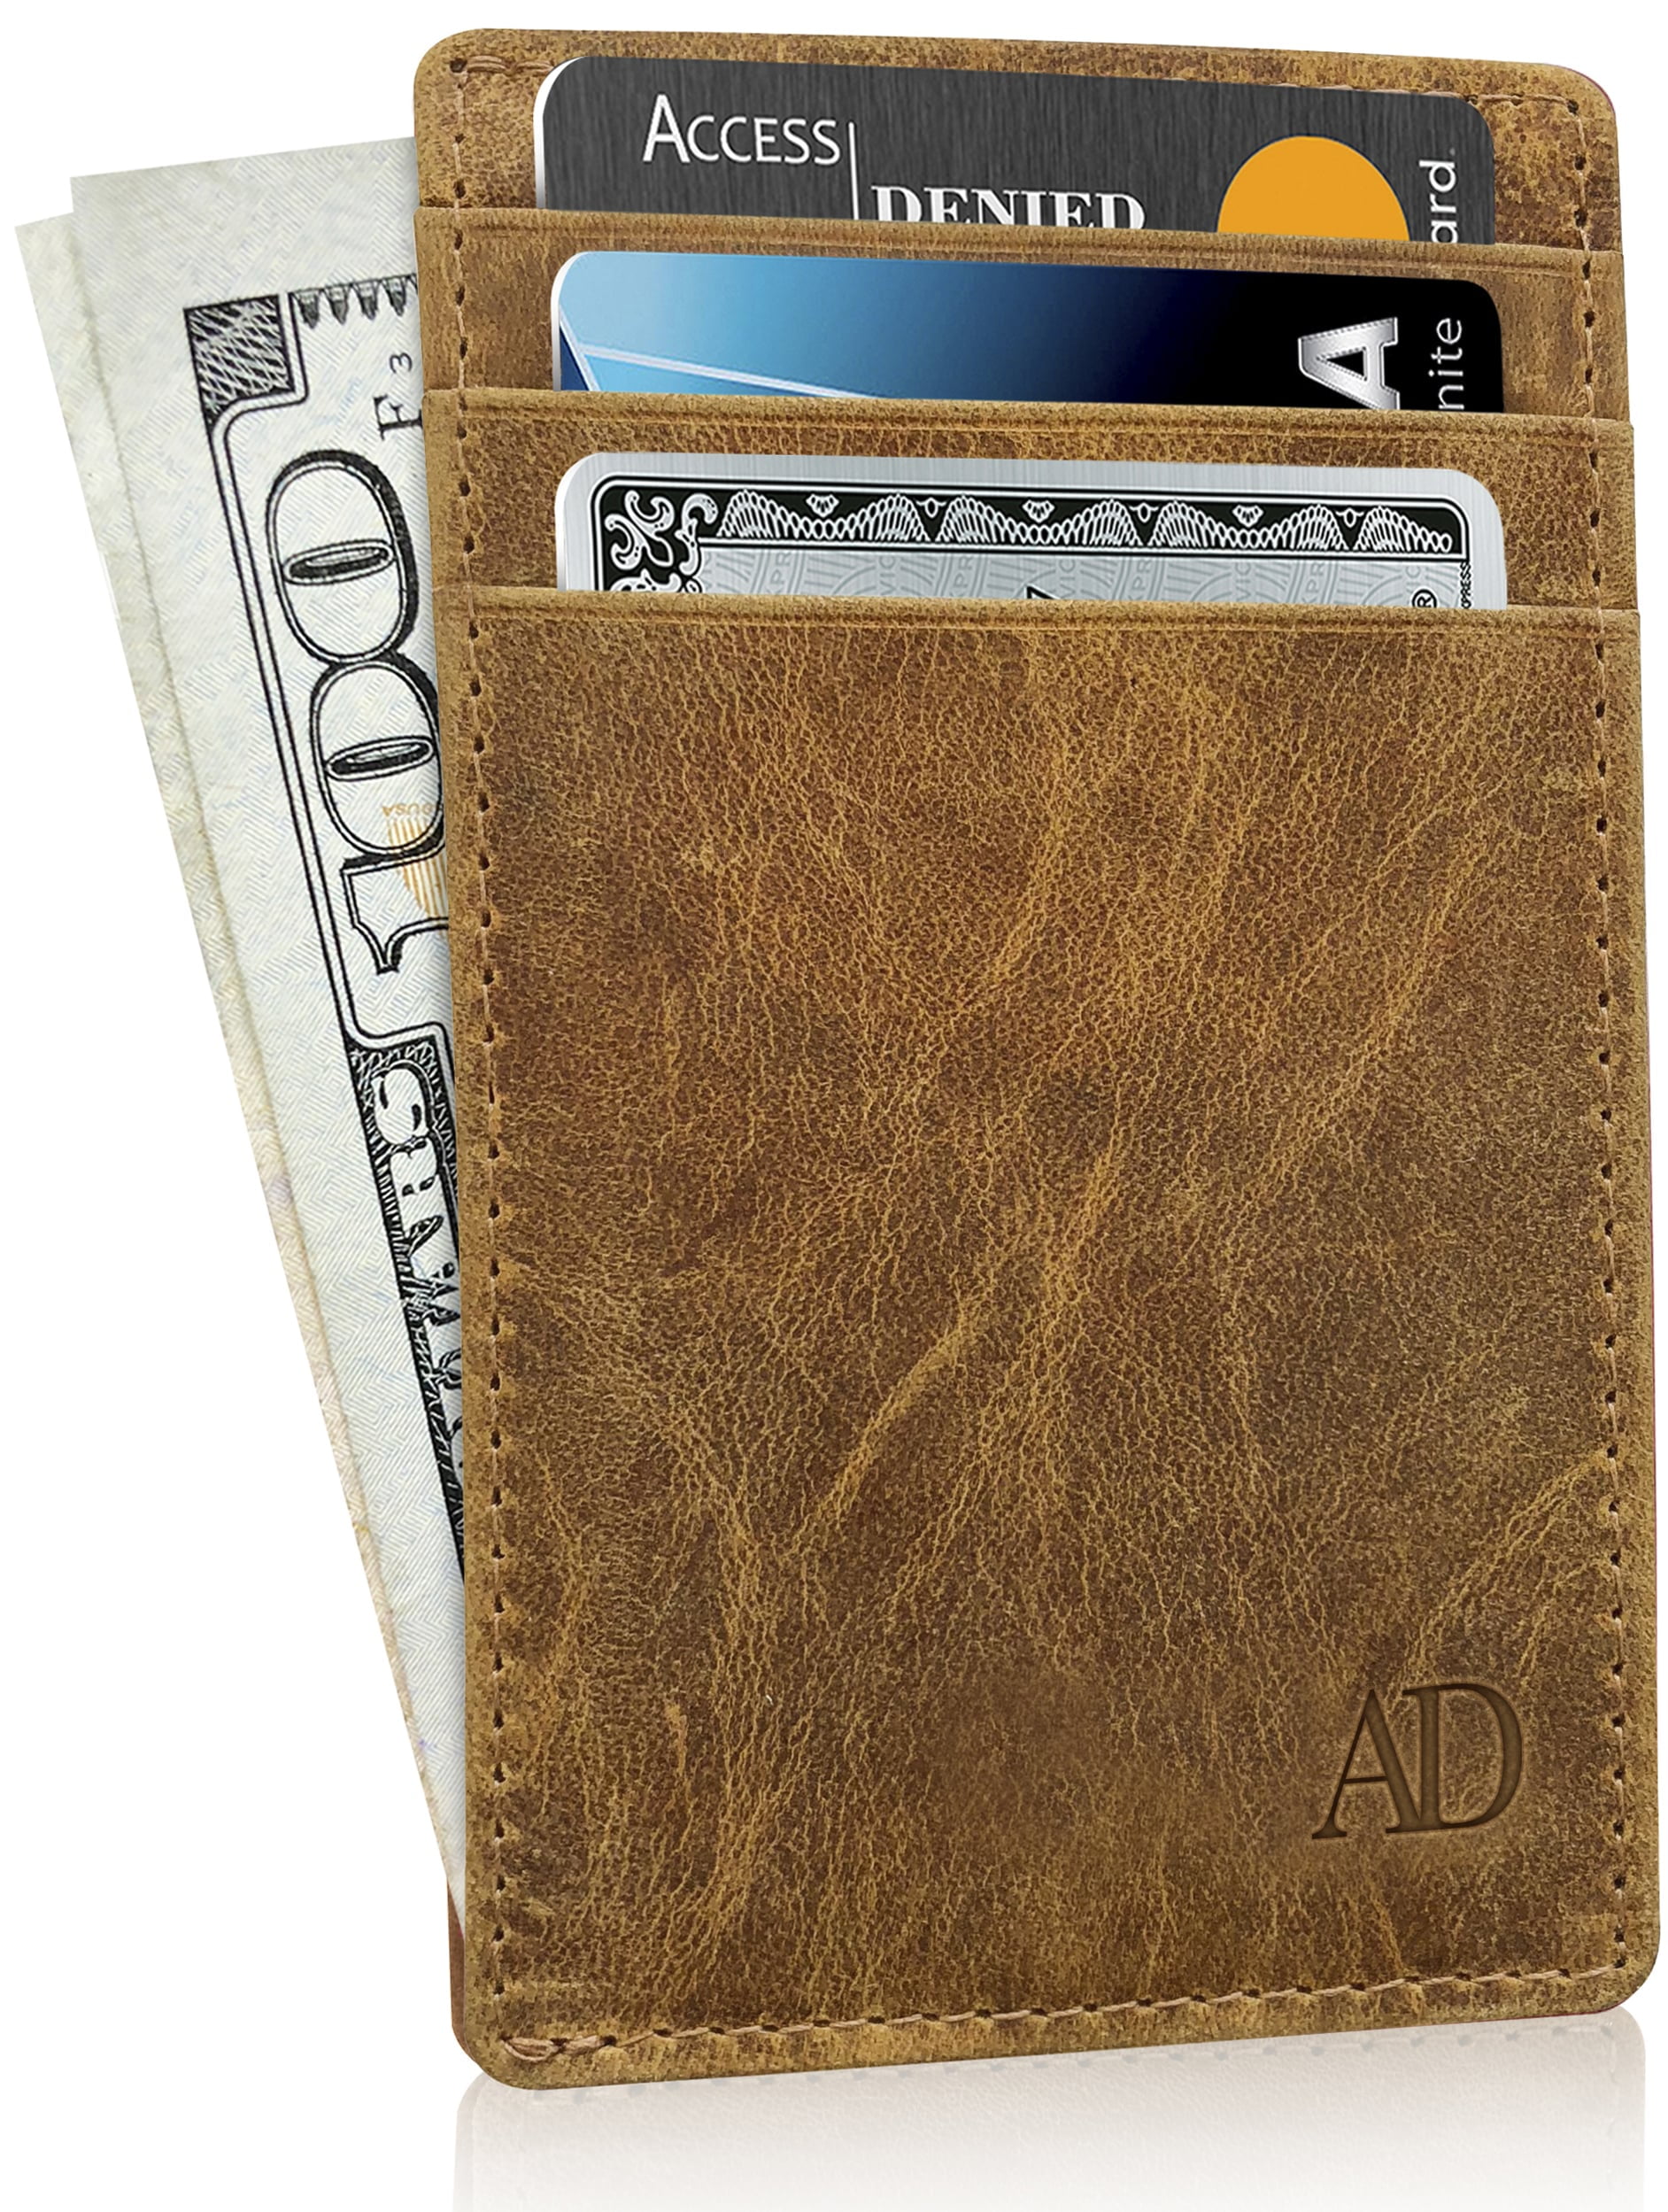 Light Brown Minimalist Genuine Leather Card Case Holder Slim Front Pocket Wallet Handmade GIFT Ready